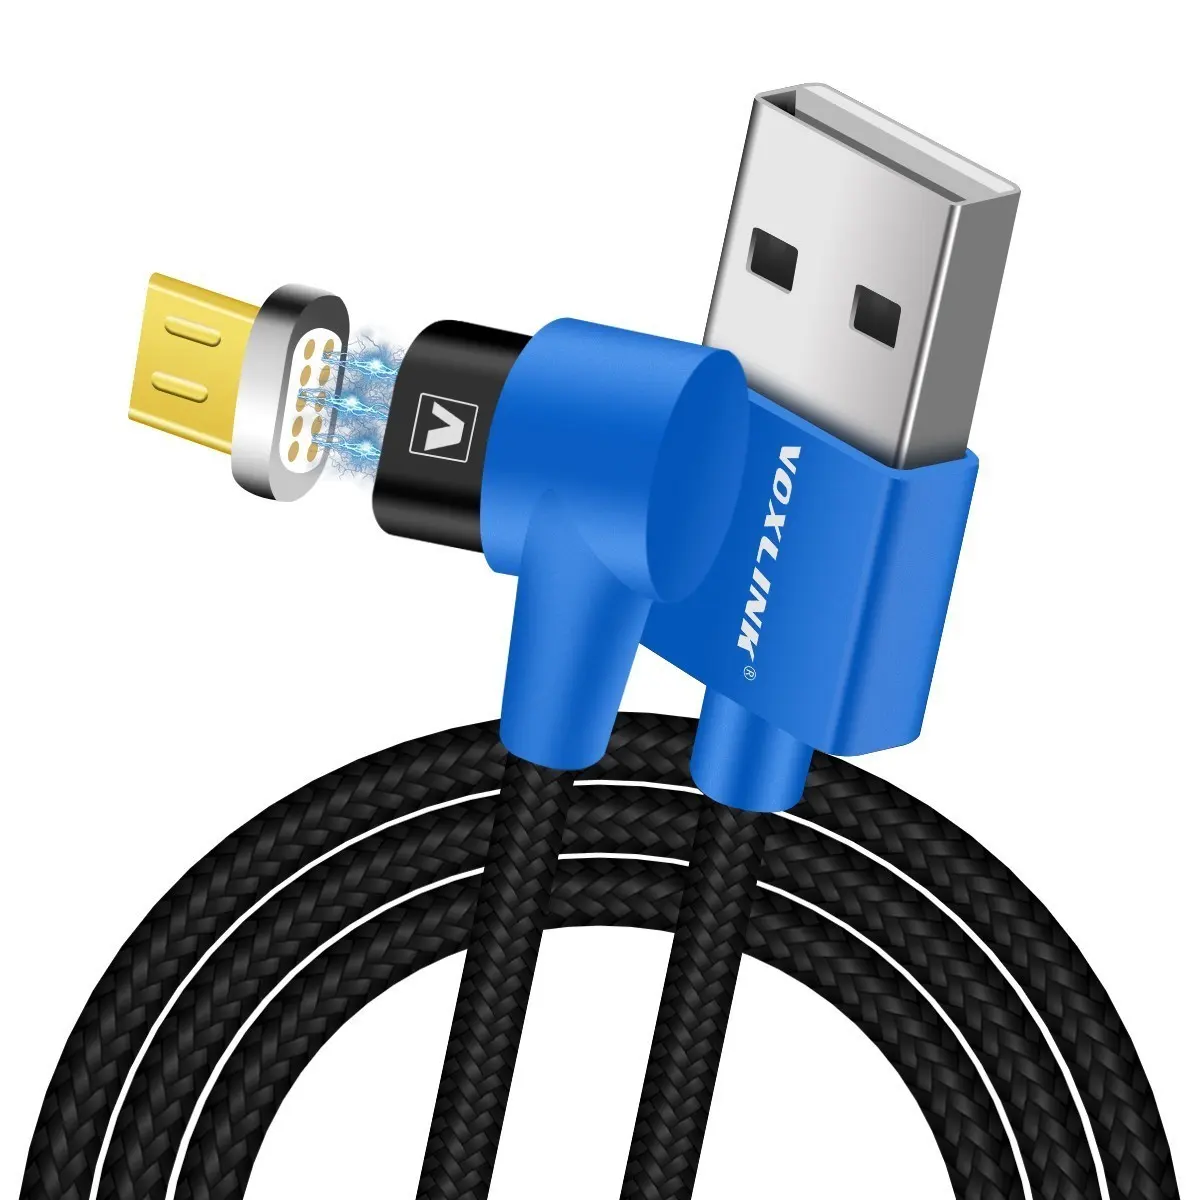 VOXLINK 일반적으로 사용되는 액세서리 및 부품 마그네틱 마이크로 USB 충전기 90 도 자석 빠른 충전 케이블 데이터 라인